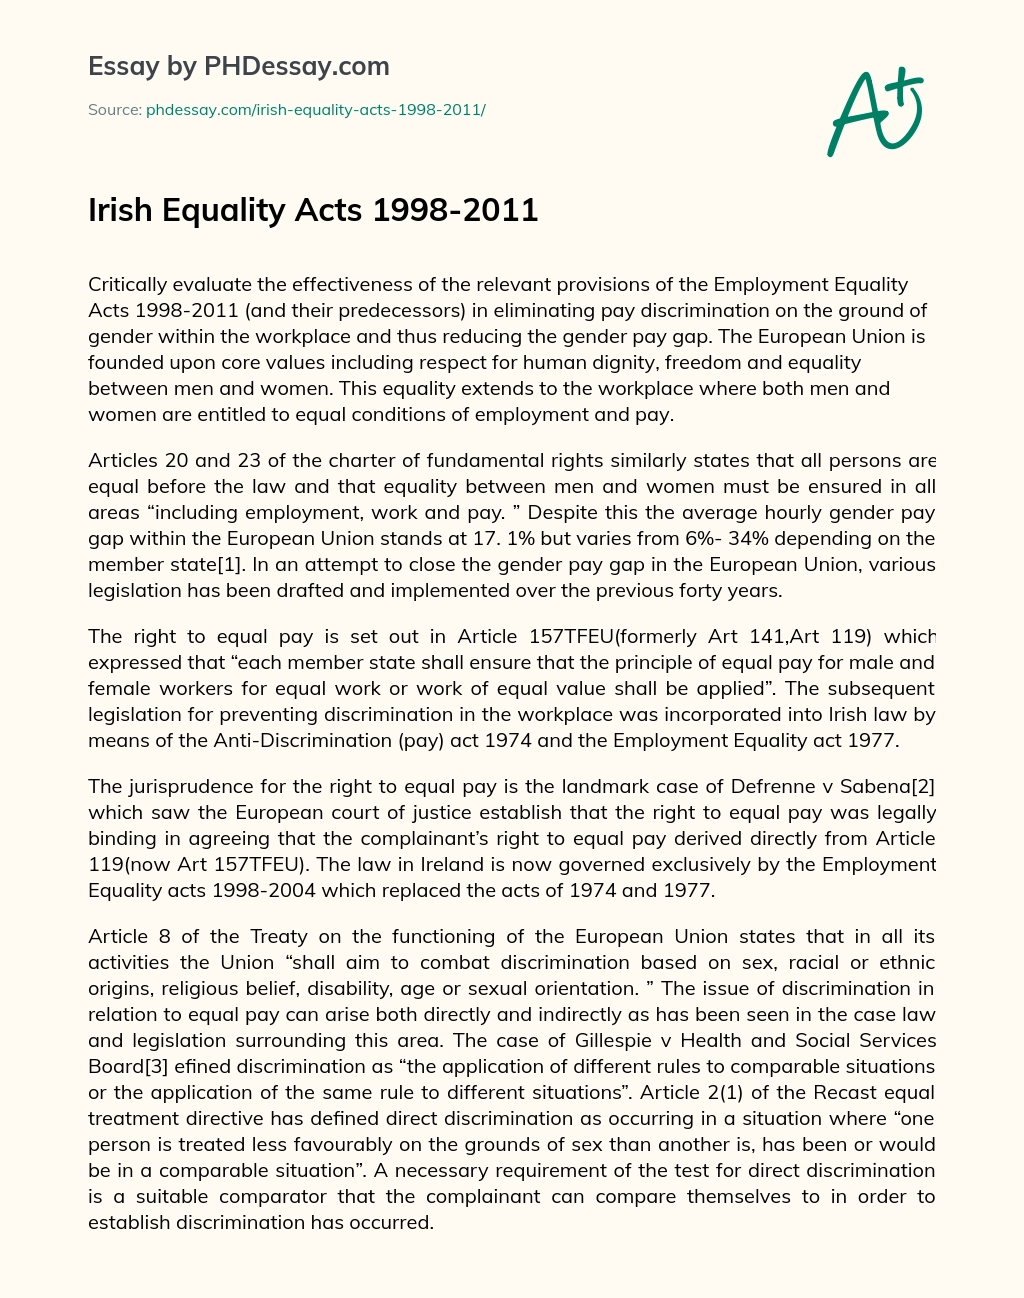 Irish Equality Acts 1998-2011 essay